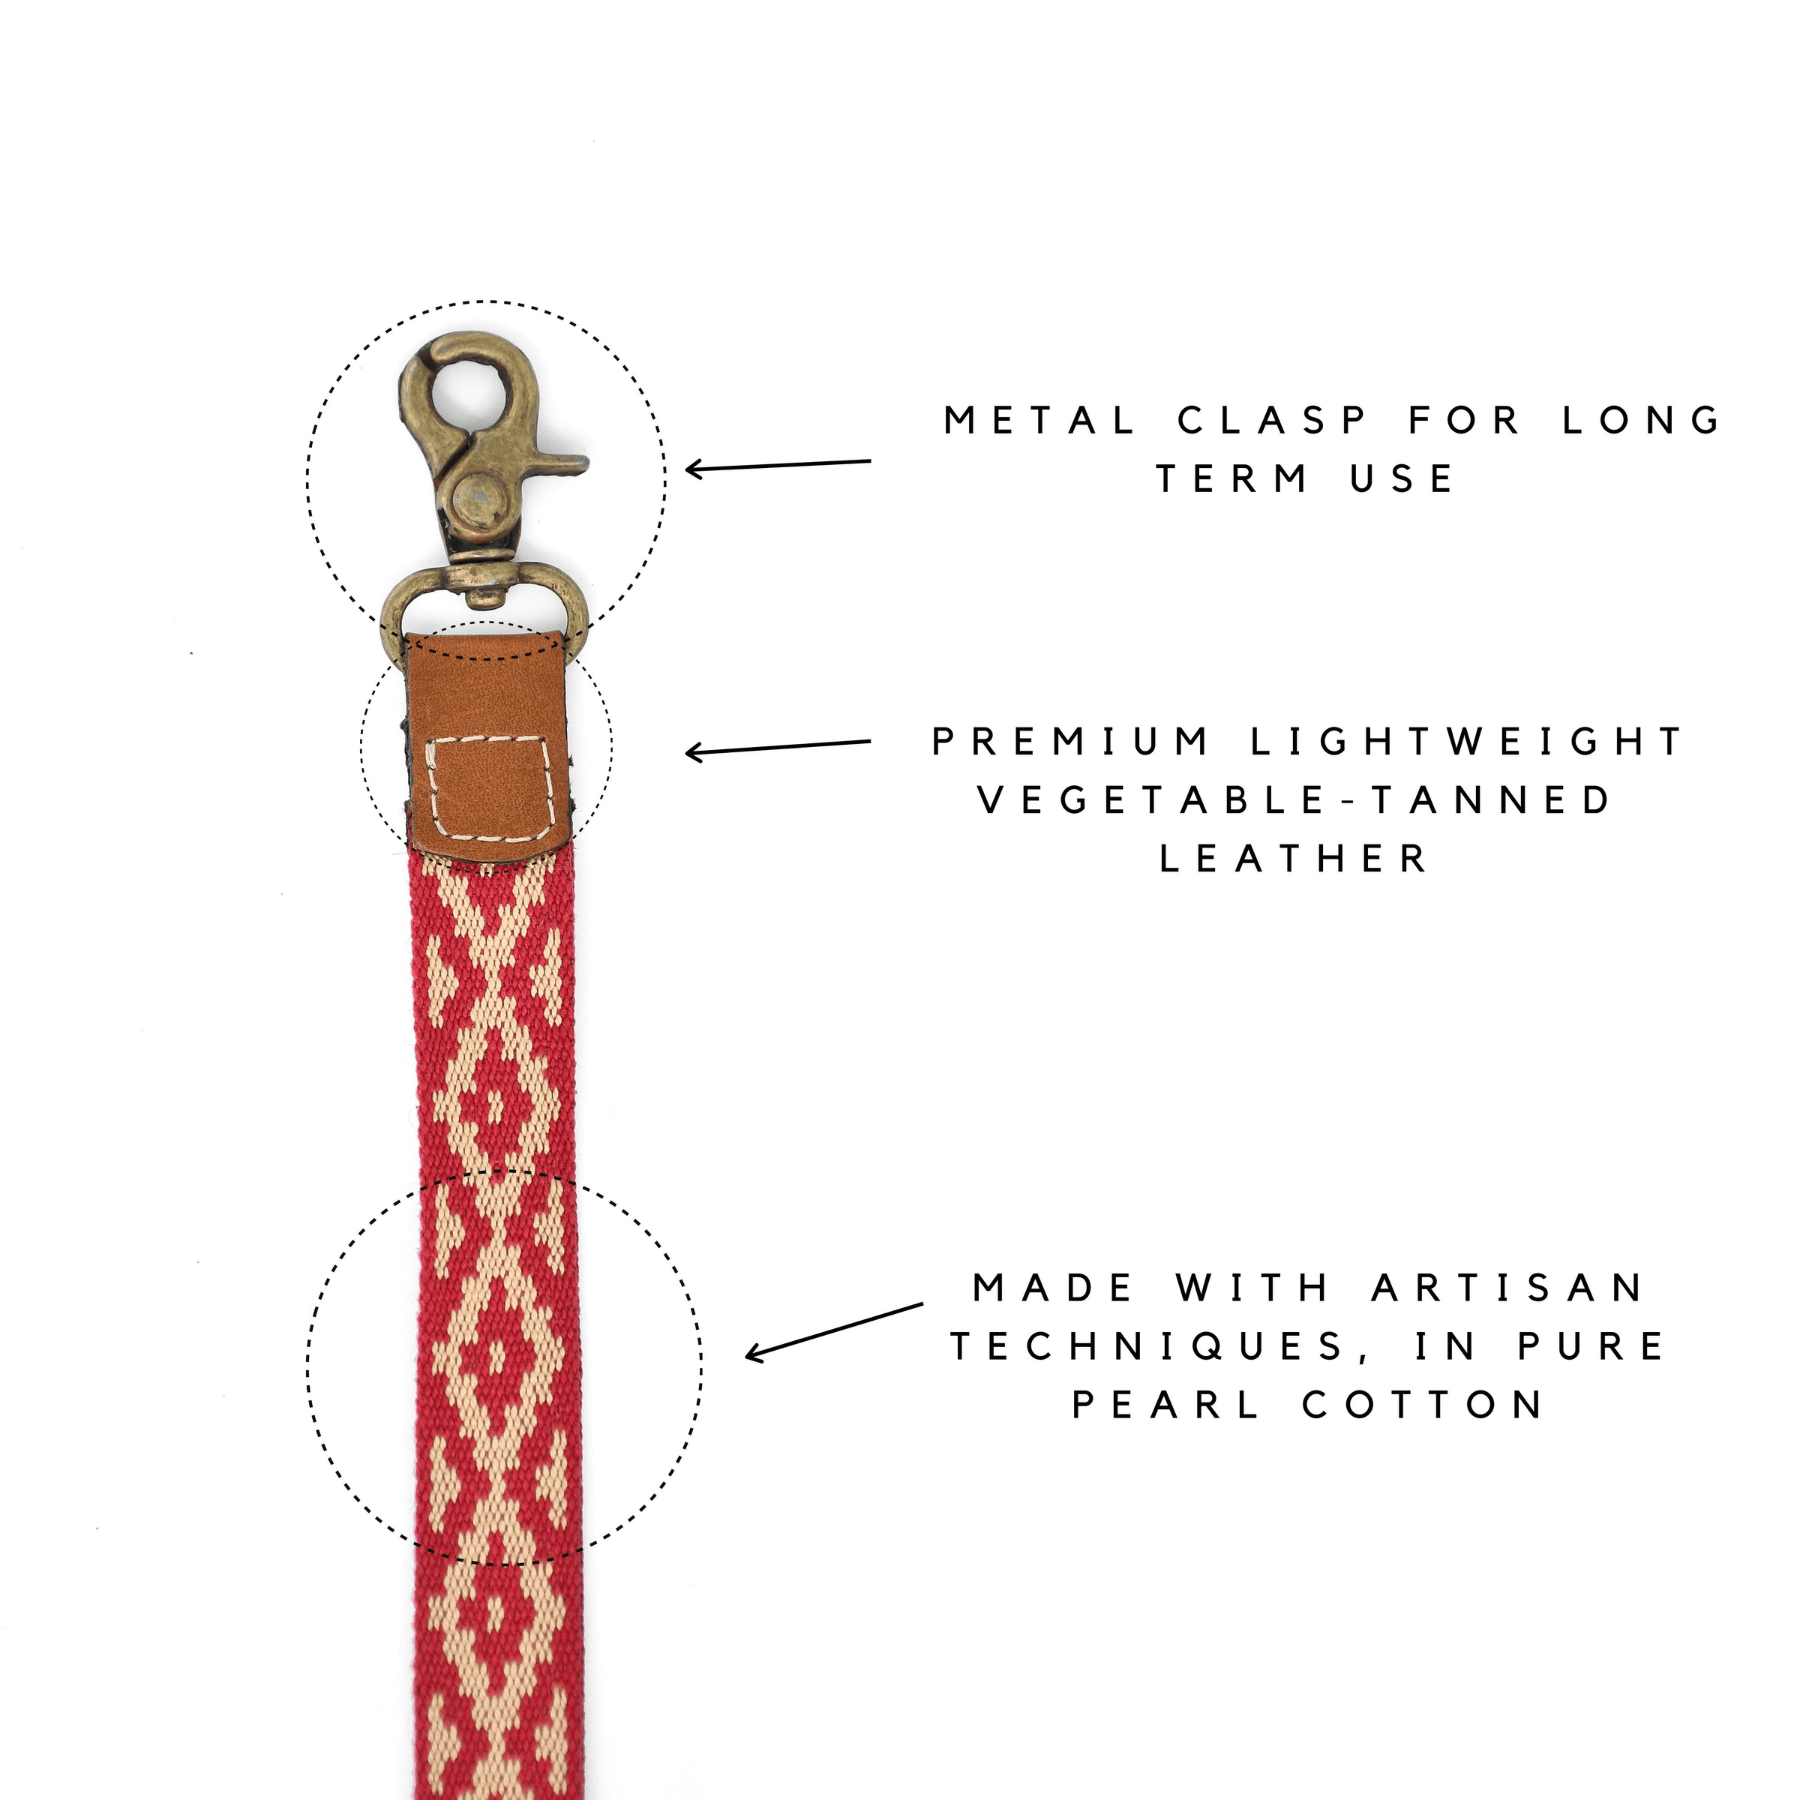 Gaucholife Keychain Wrist Lanyard (Pampa Red)